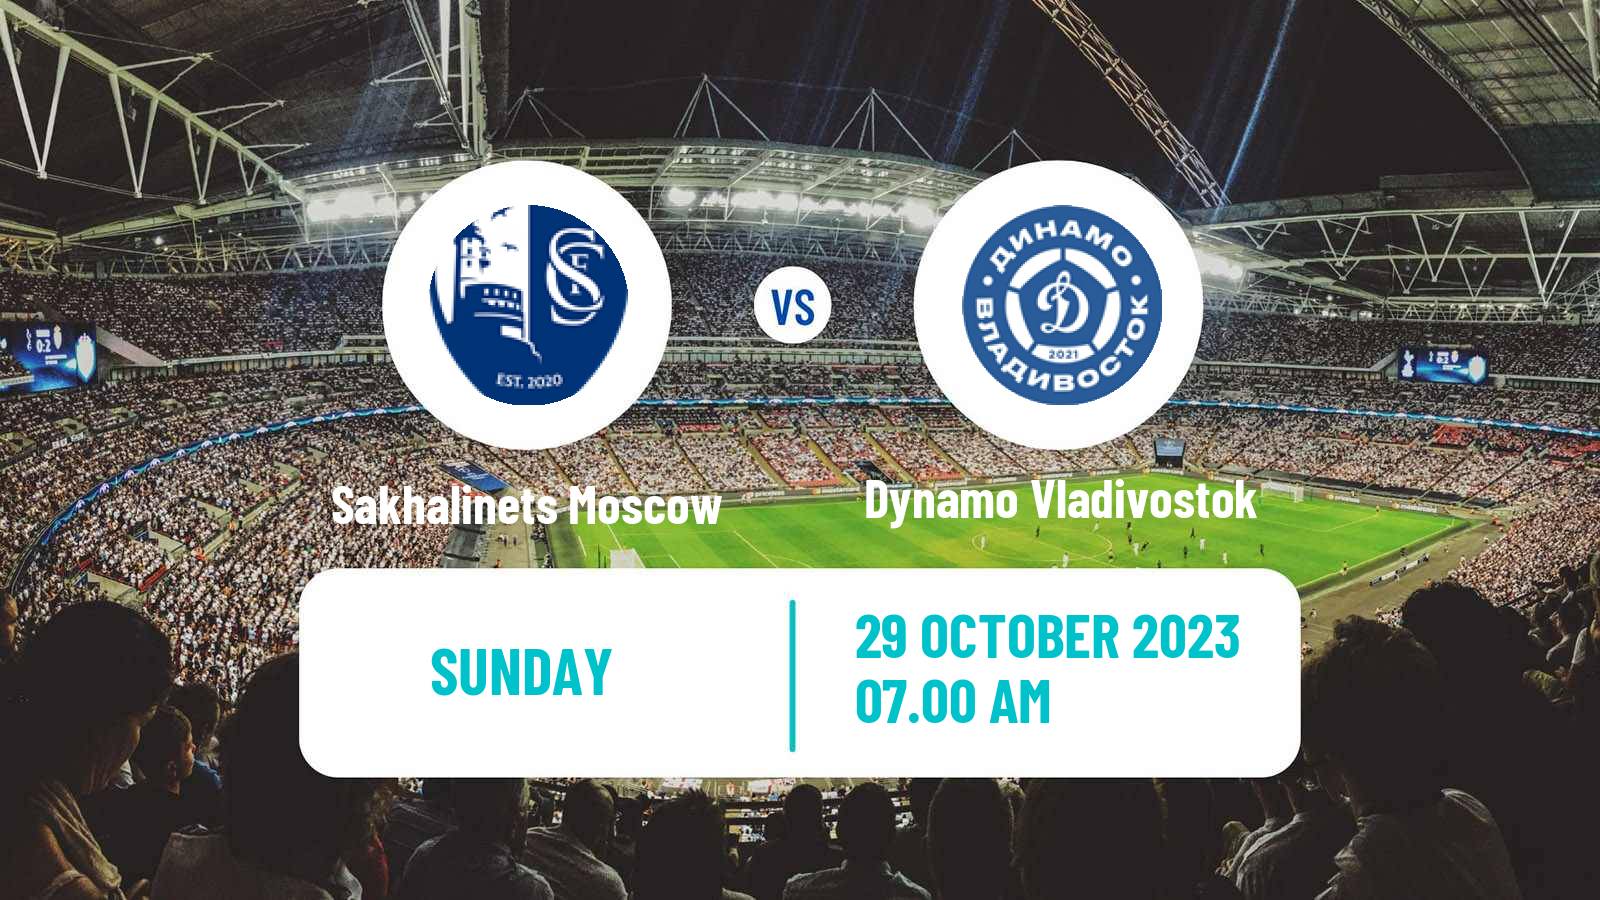 Soccer FNL 2 Division B Group 3 Sakhalinets Moscow - Dynamo Vladivostok